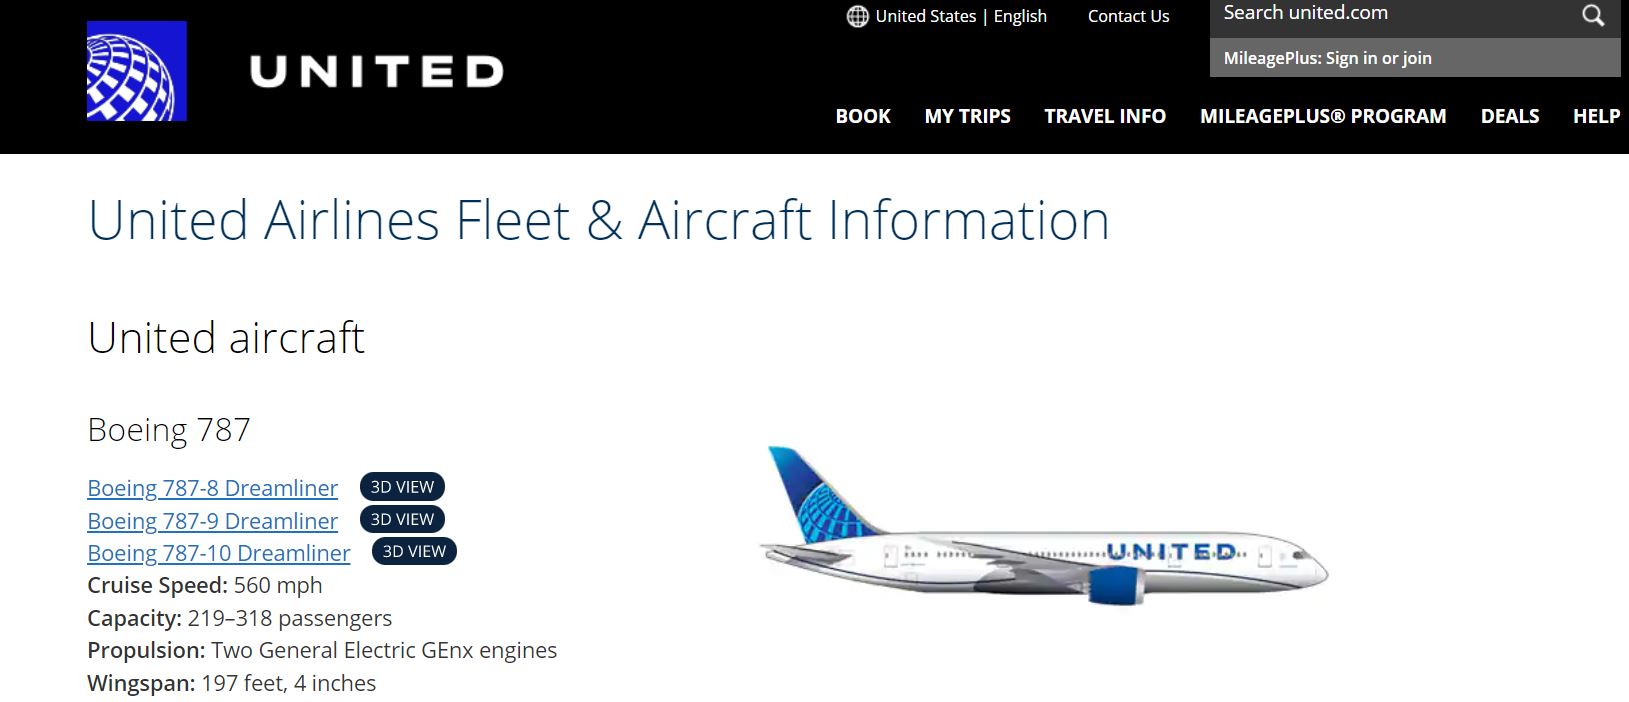 United Airlines 787 fleet information